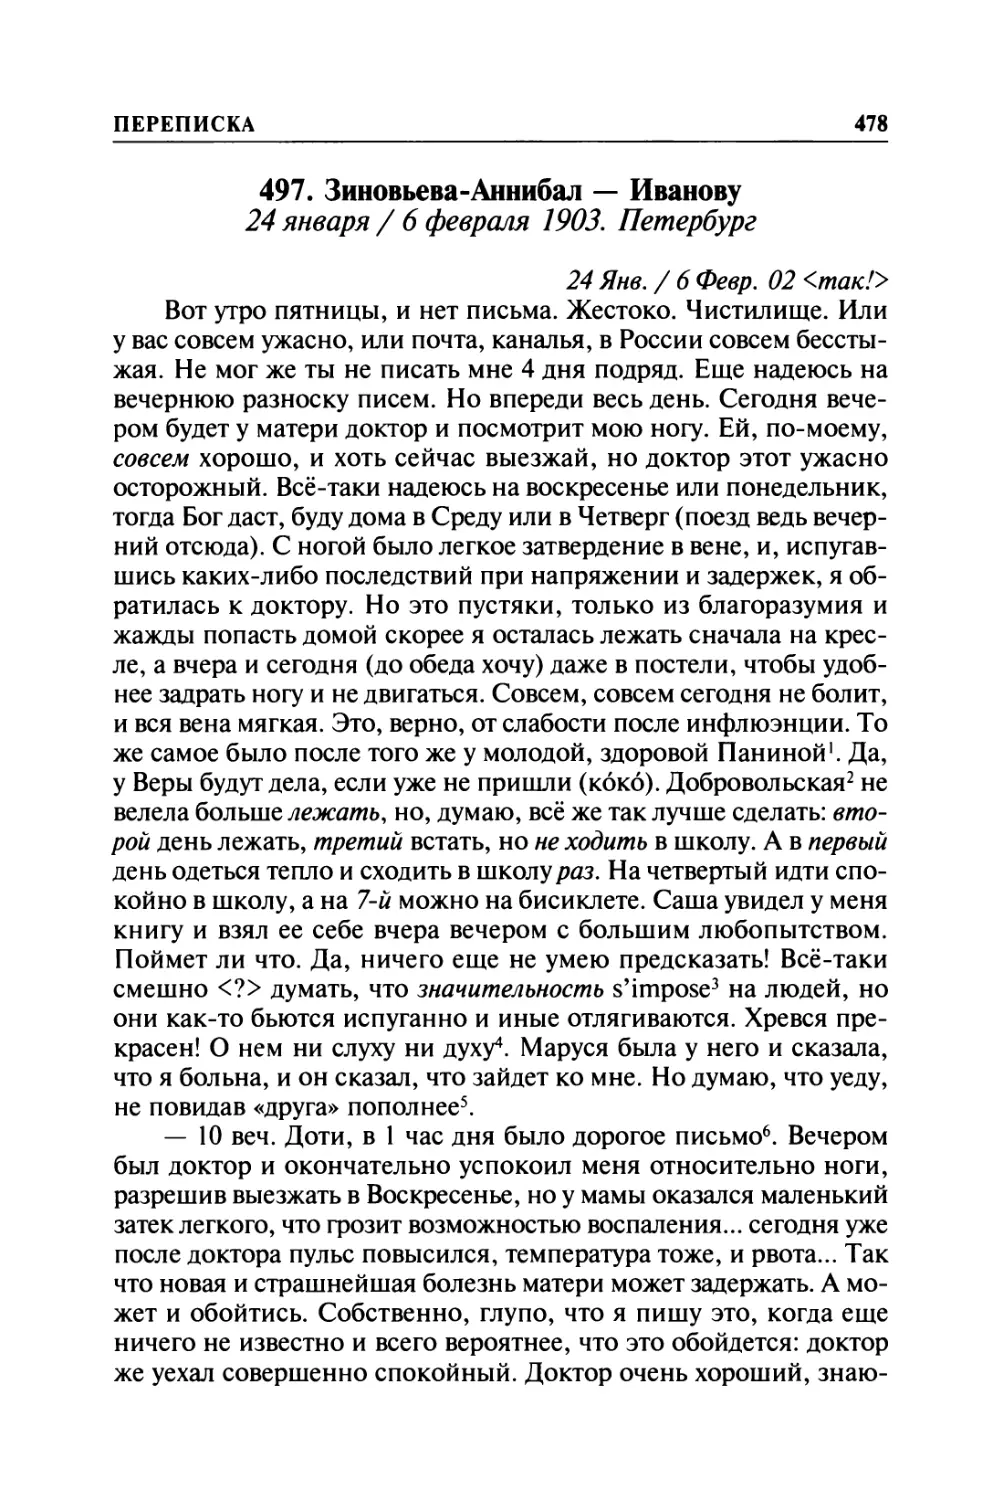 497. Зиновьева-Аннибал — Иванову. 24 января / 6 февраля 1903. Петербург